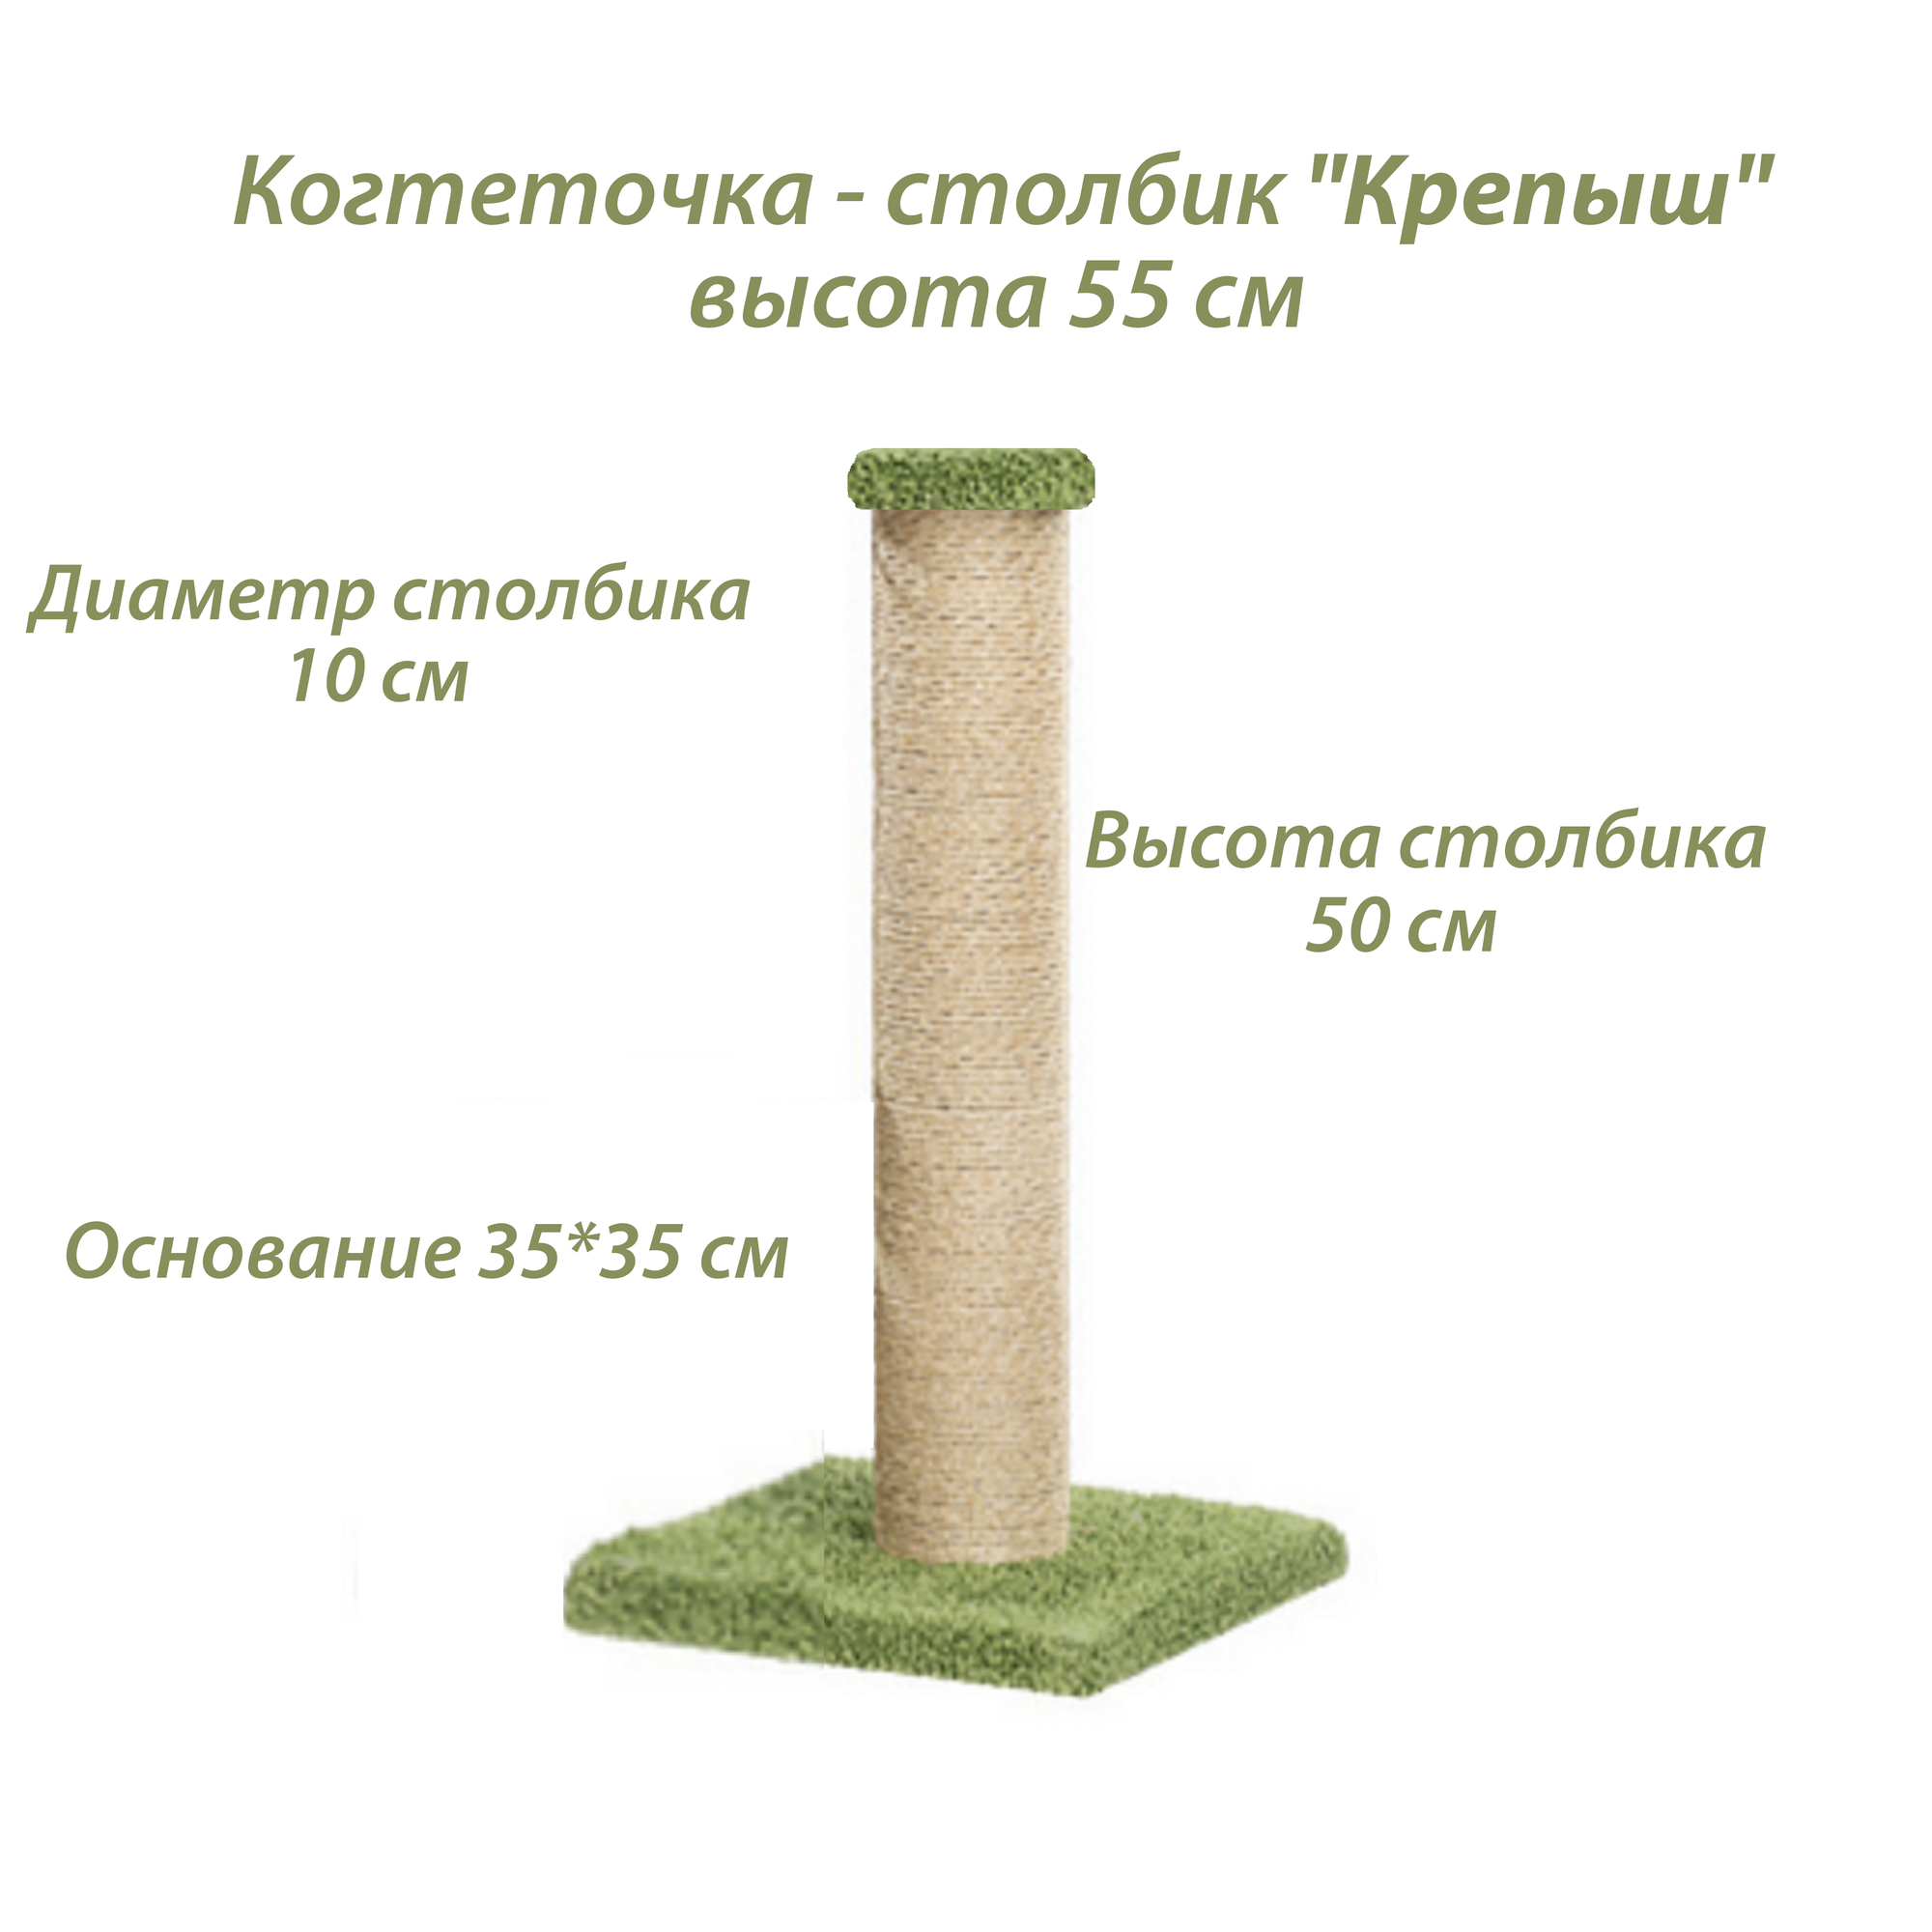 Когтеточка-столбик 55 см "Крепыш" фисташковый цвет